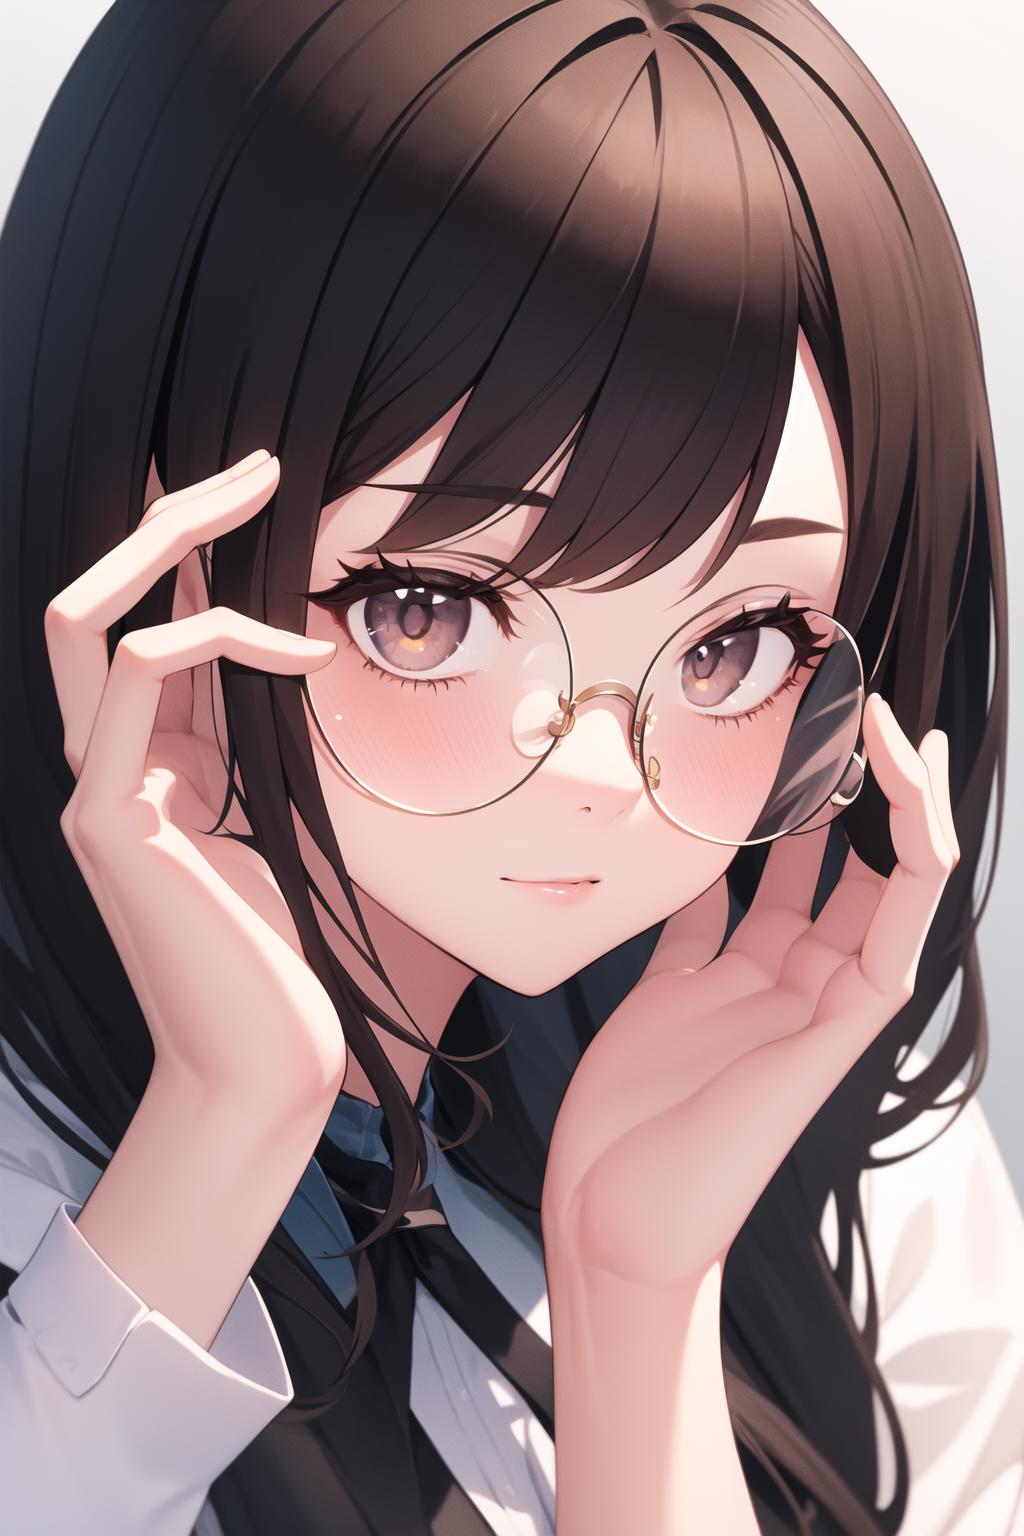 Wallpaper girl glasses anime art hd picture image